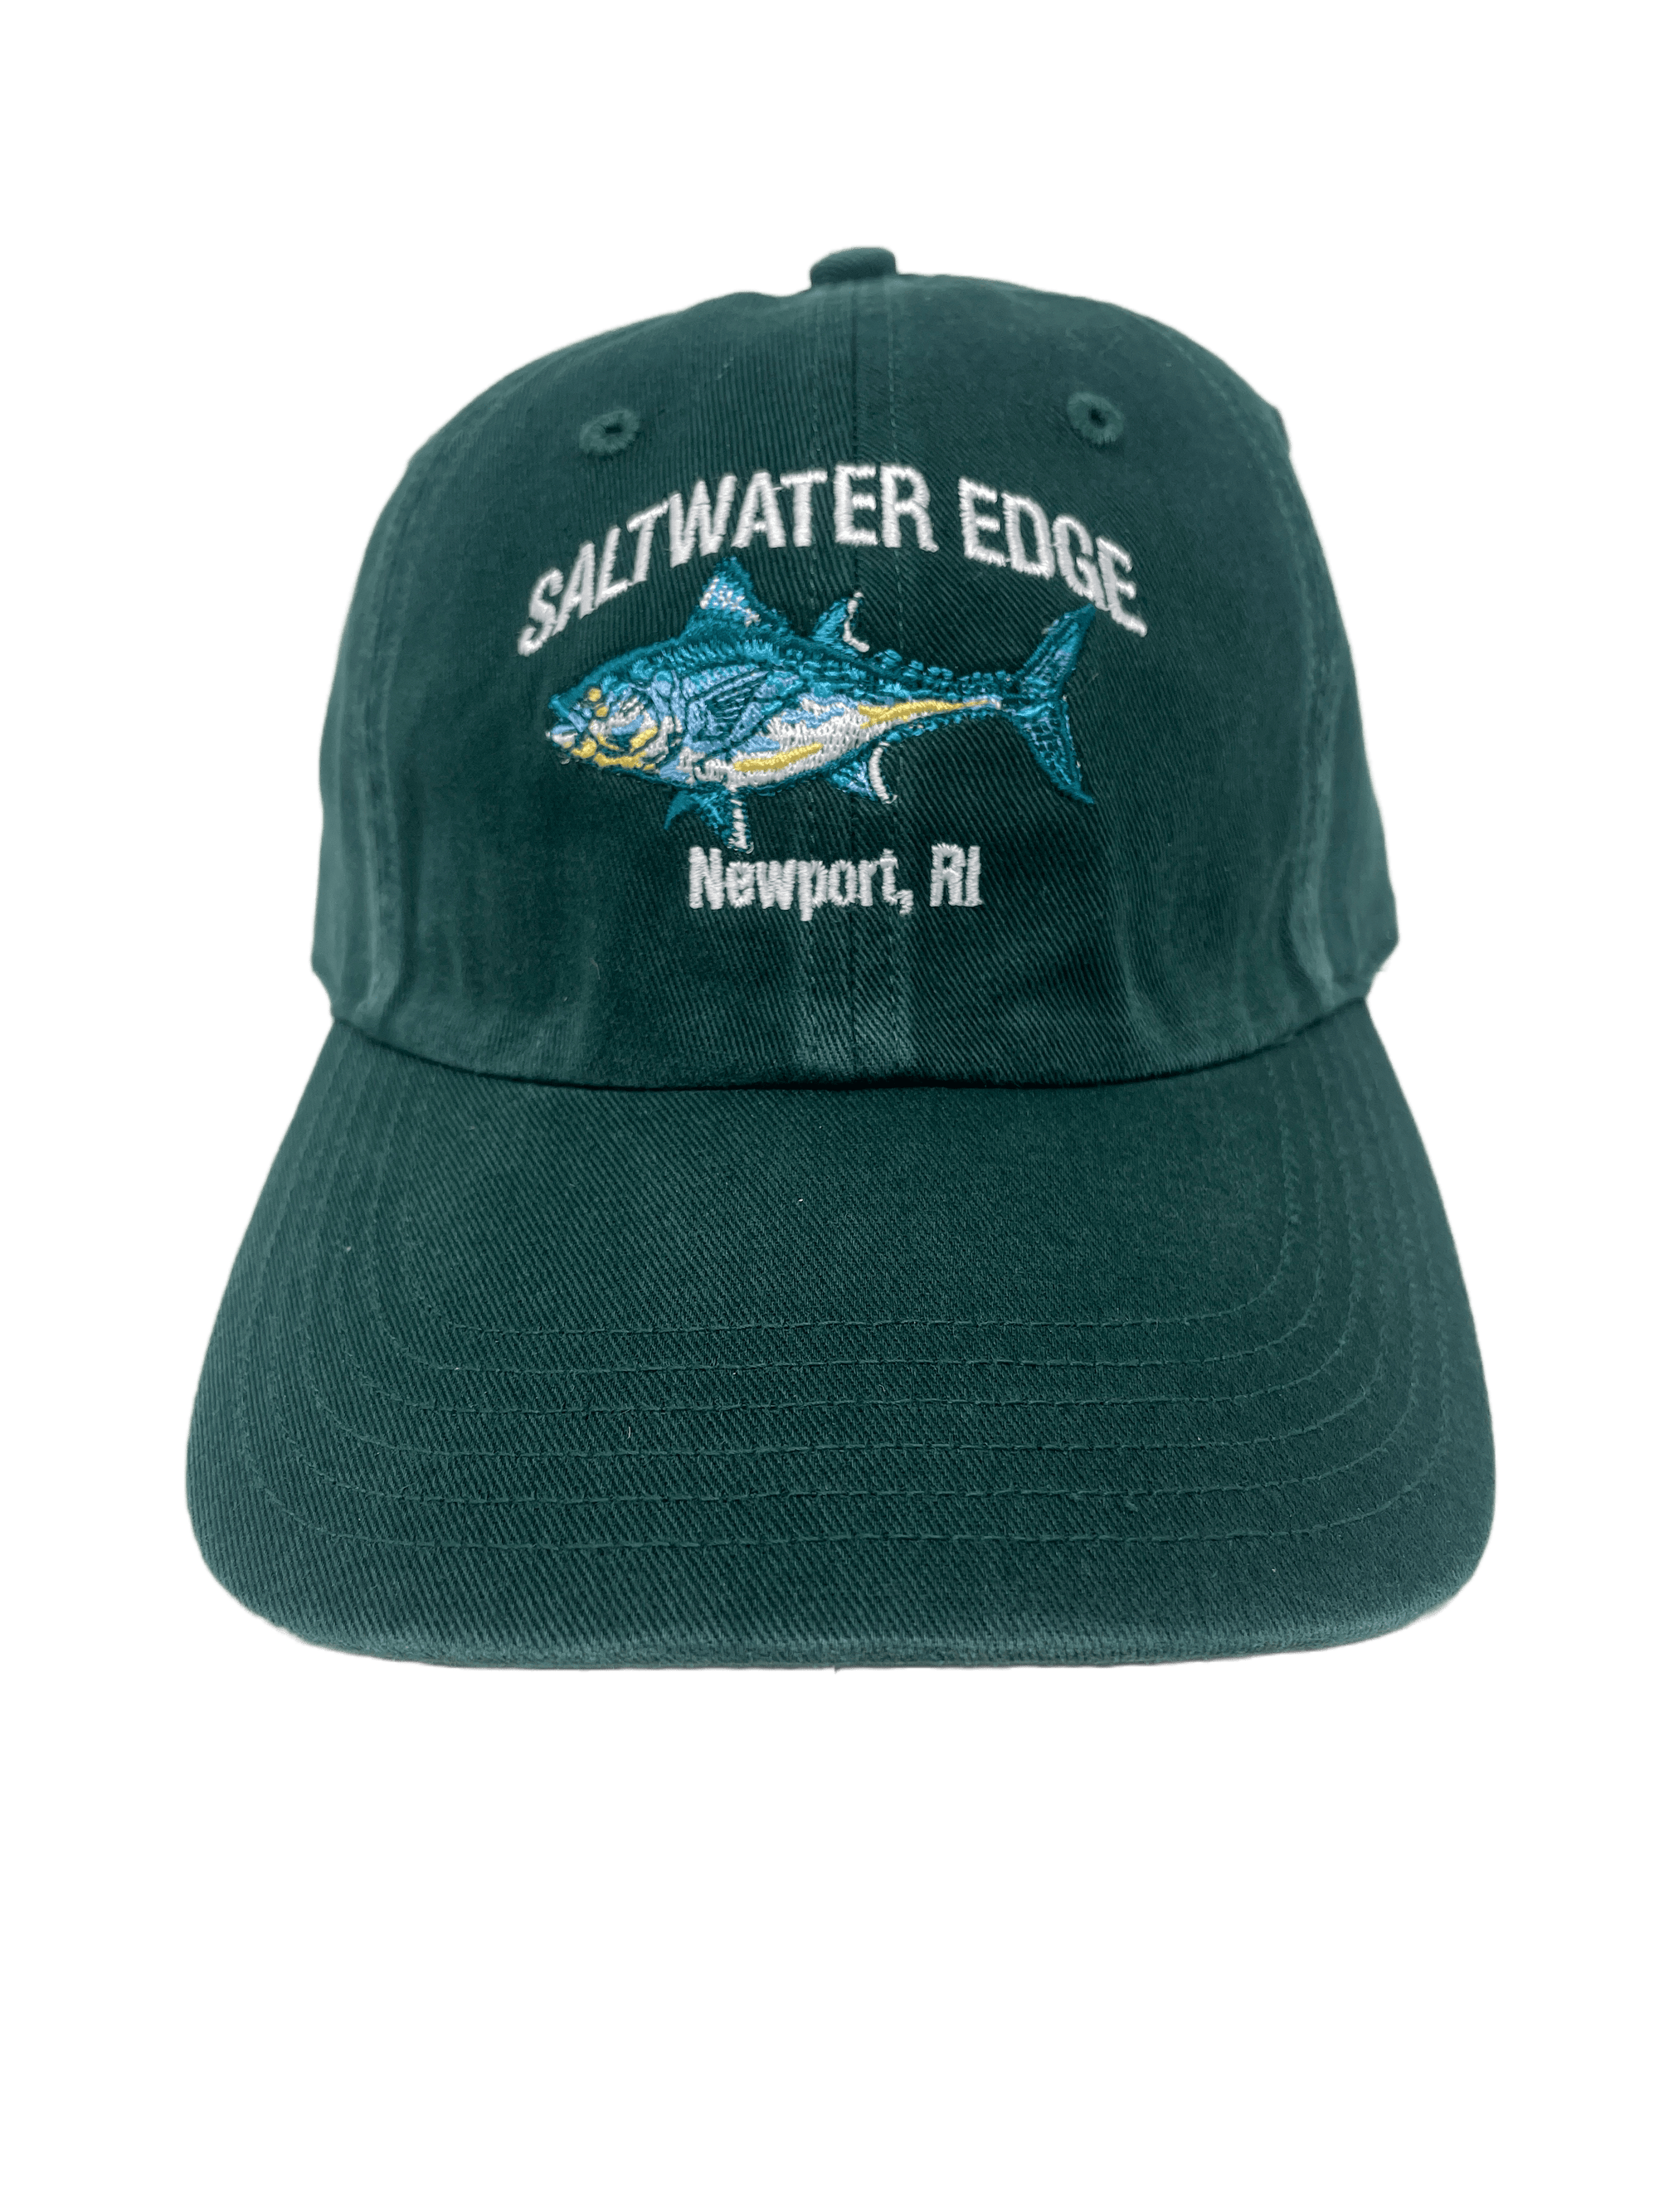 Hats - The Saltwater Edge